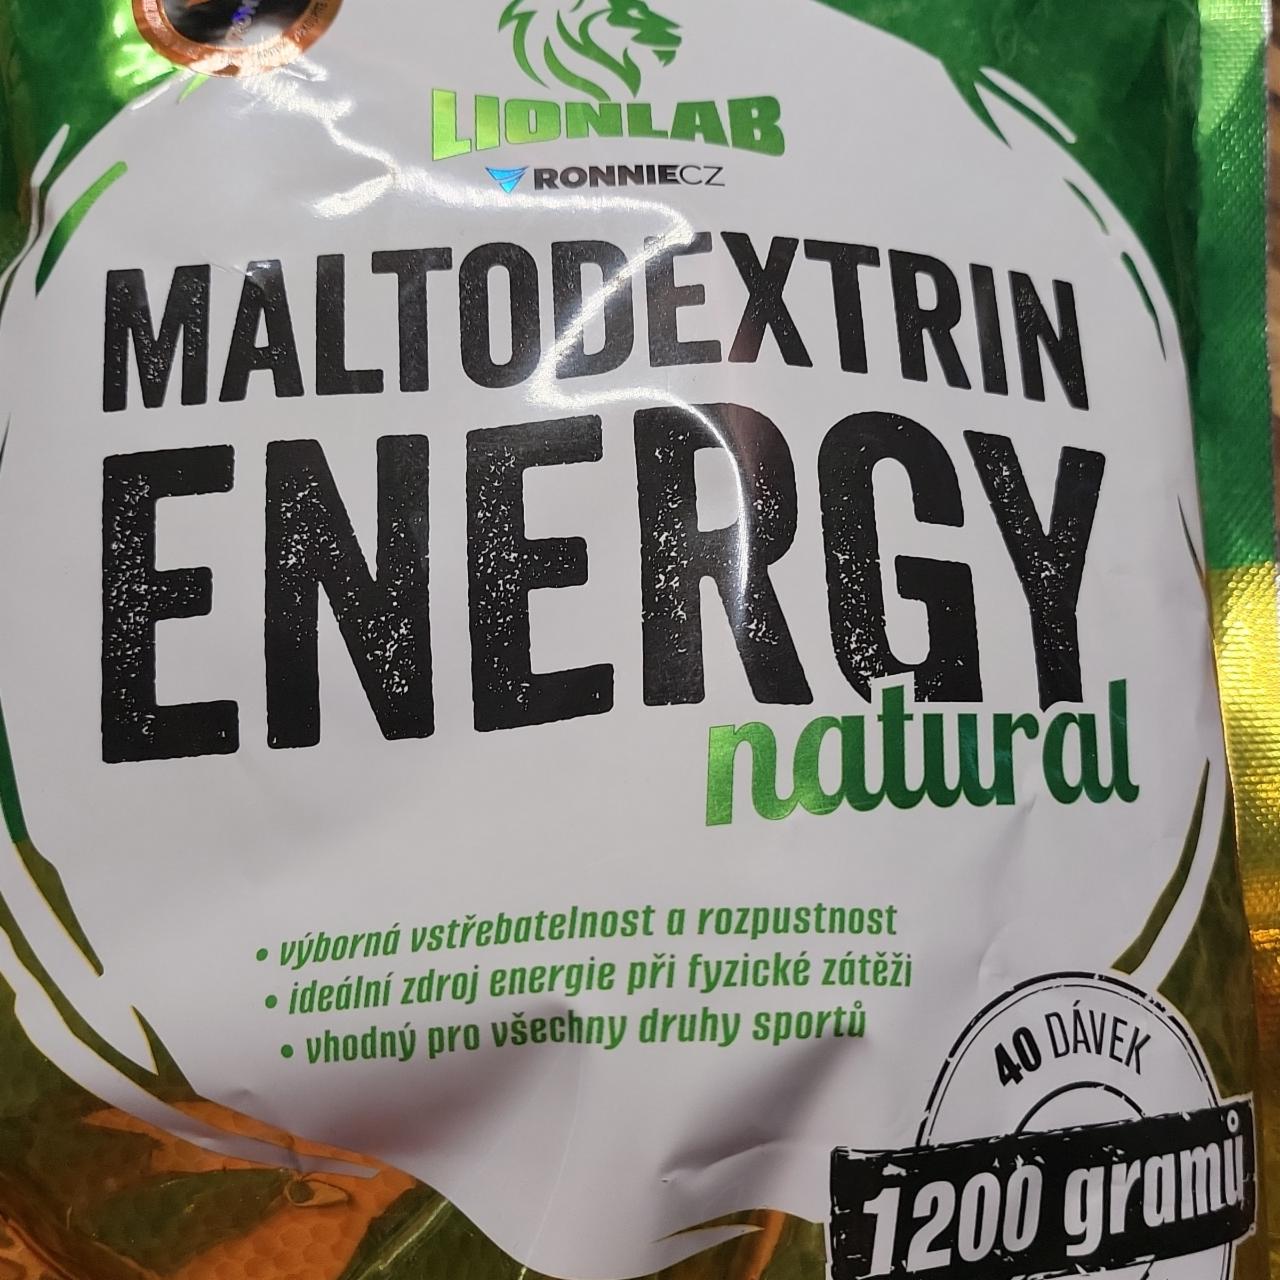 Fotografie - Maltodextrin energy natural Lionlab